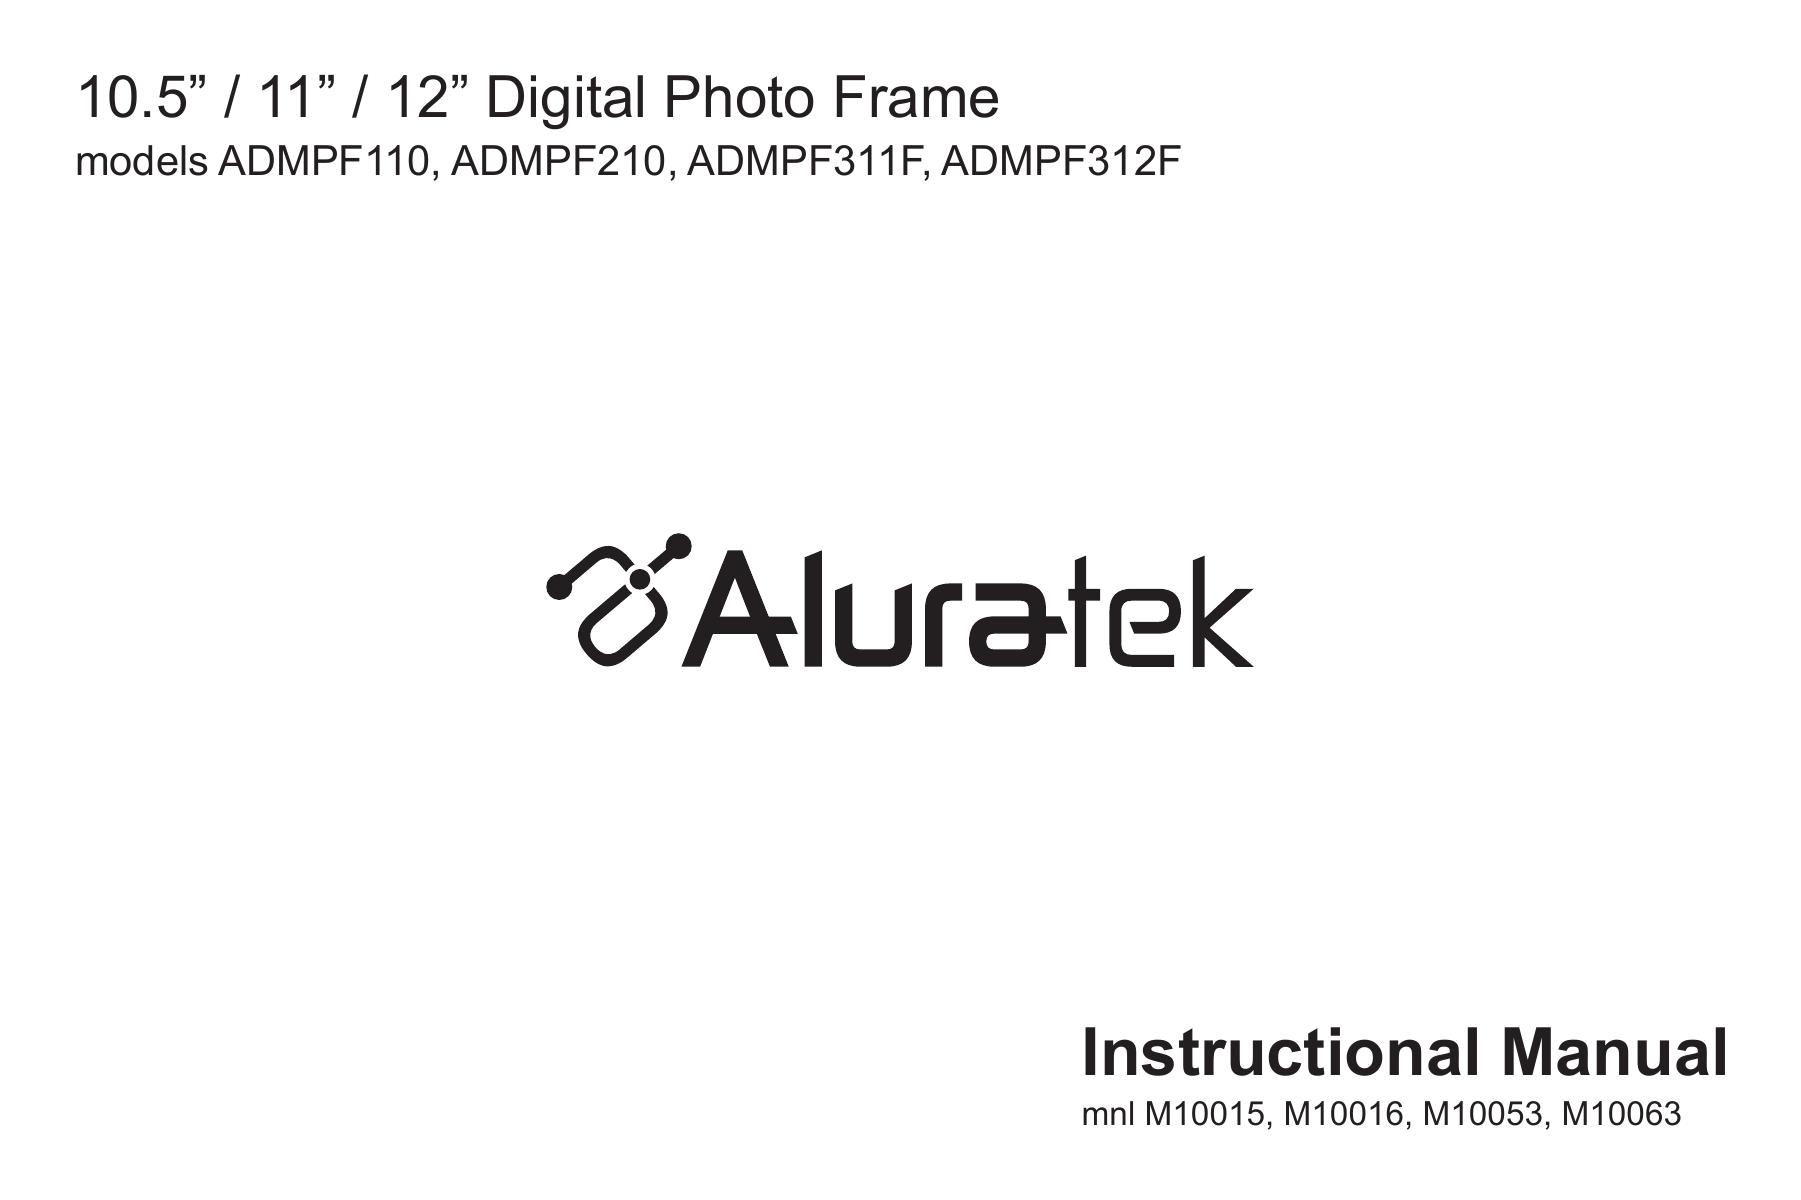 Aluratek ADMPF311F Digital Photo Frame User Manual